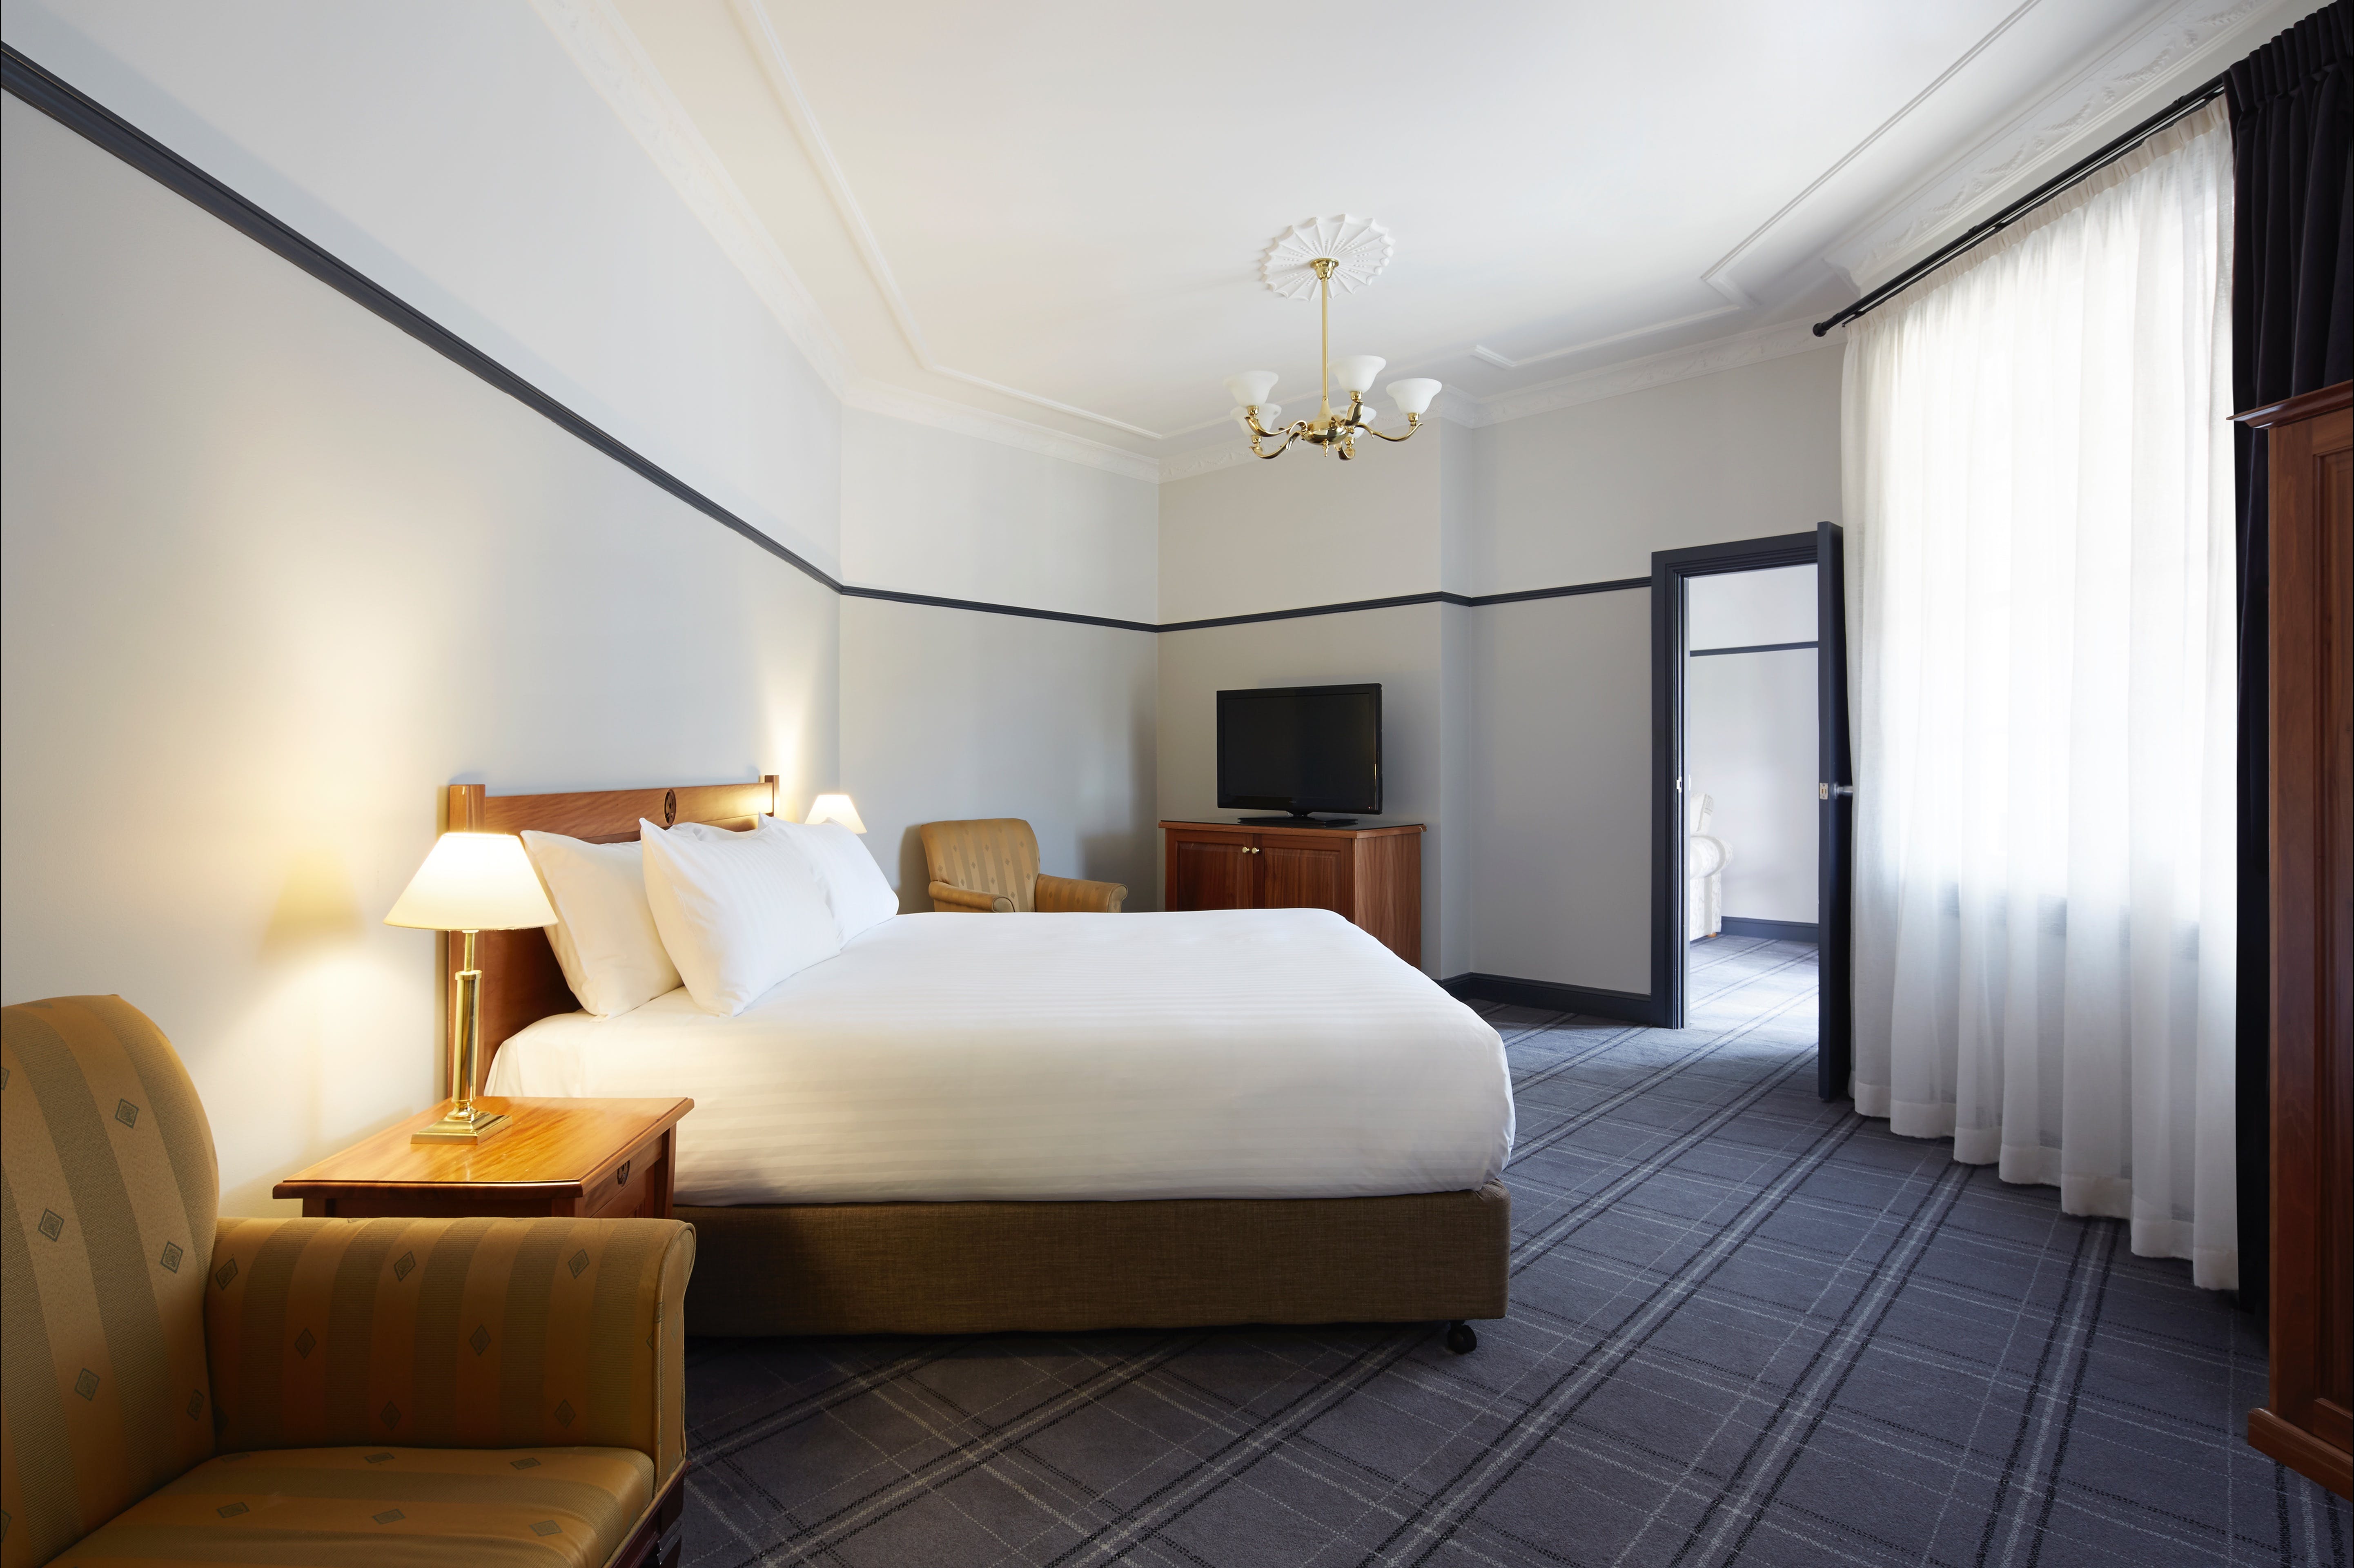 Brassey Hotel - Accommodation Broken Hill